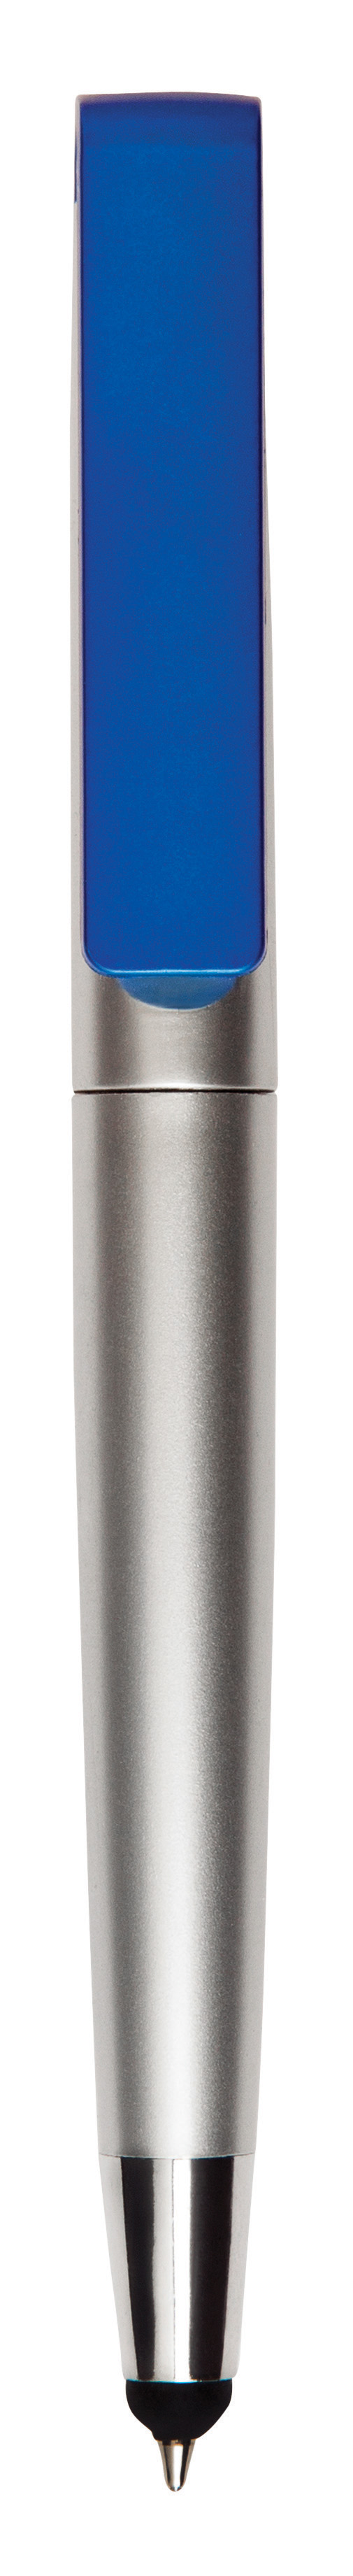 Curver Flip - Cubo de basura multiusos, negro/gris, 25 litros